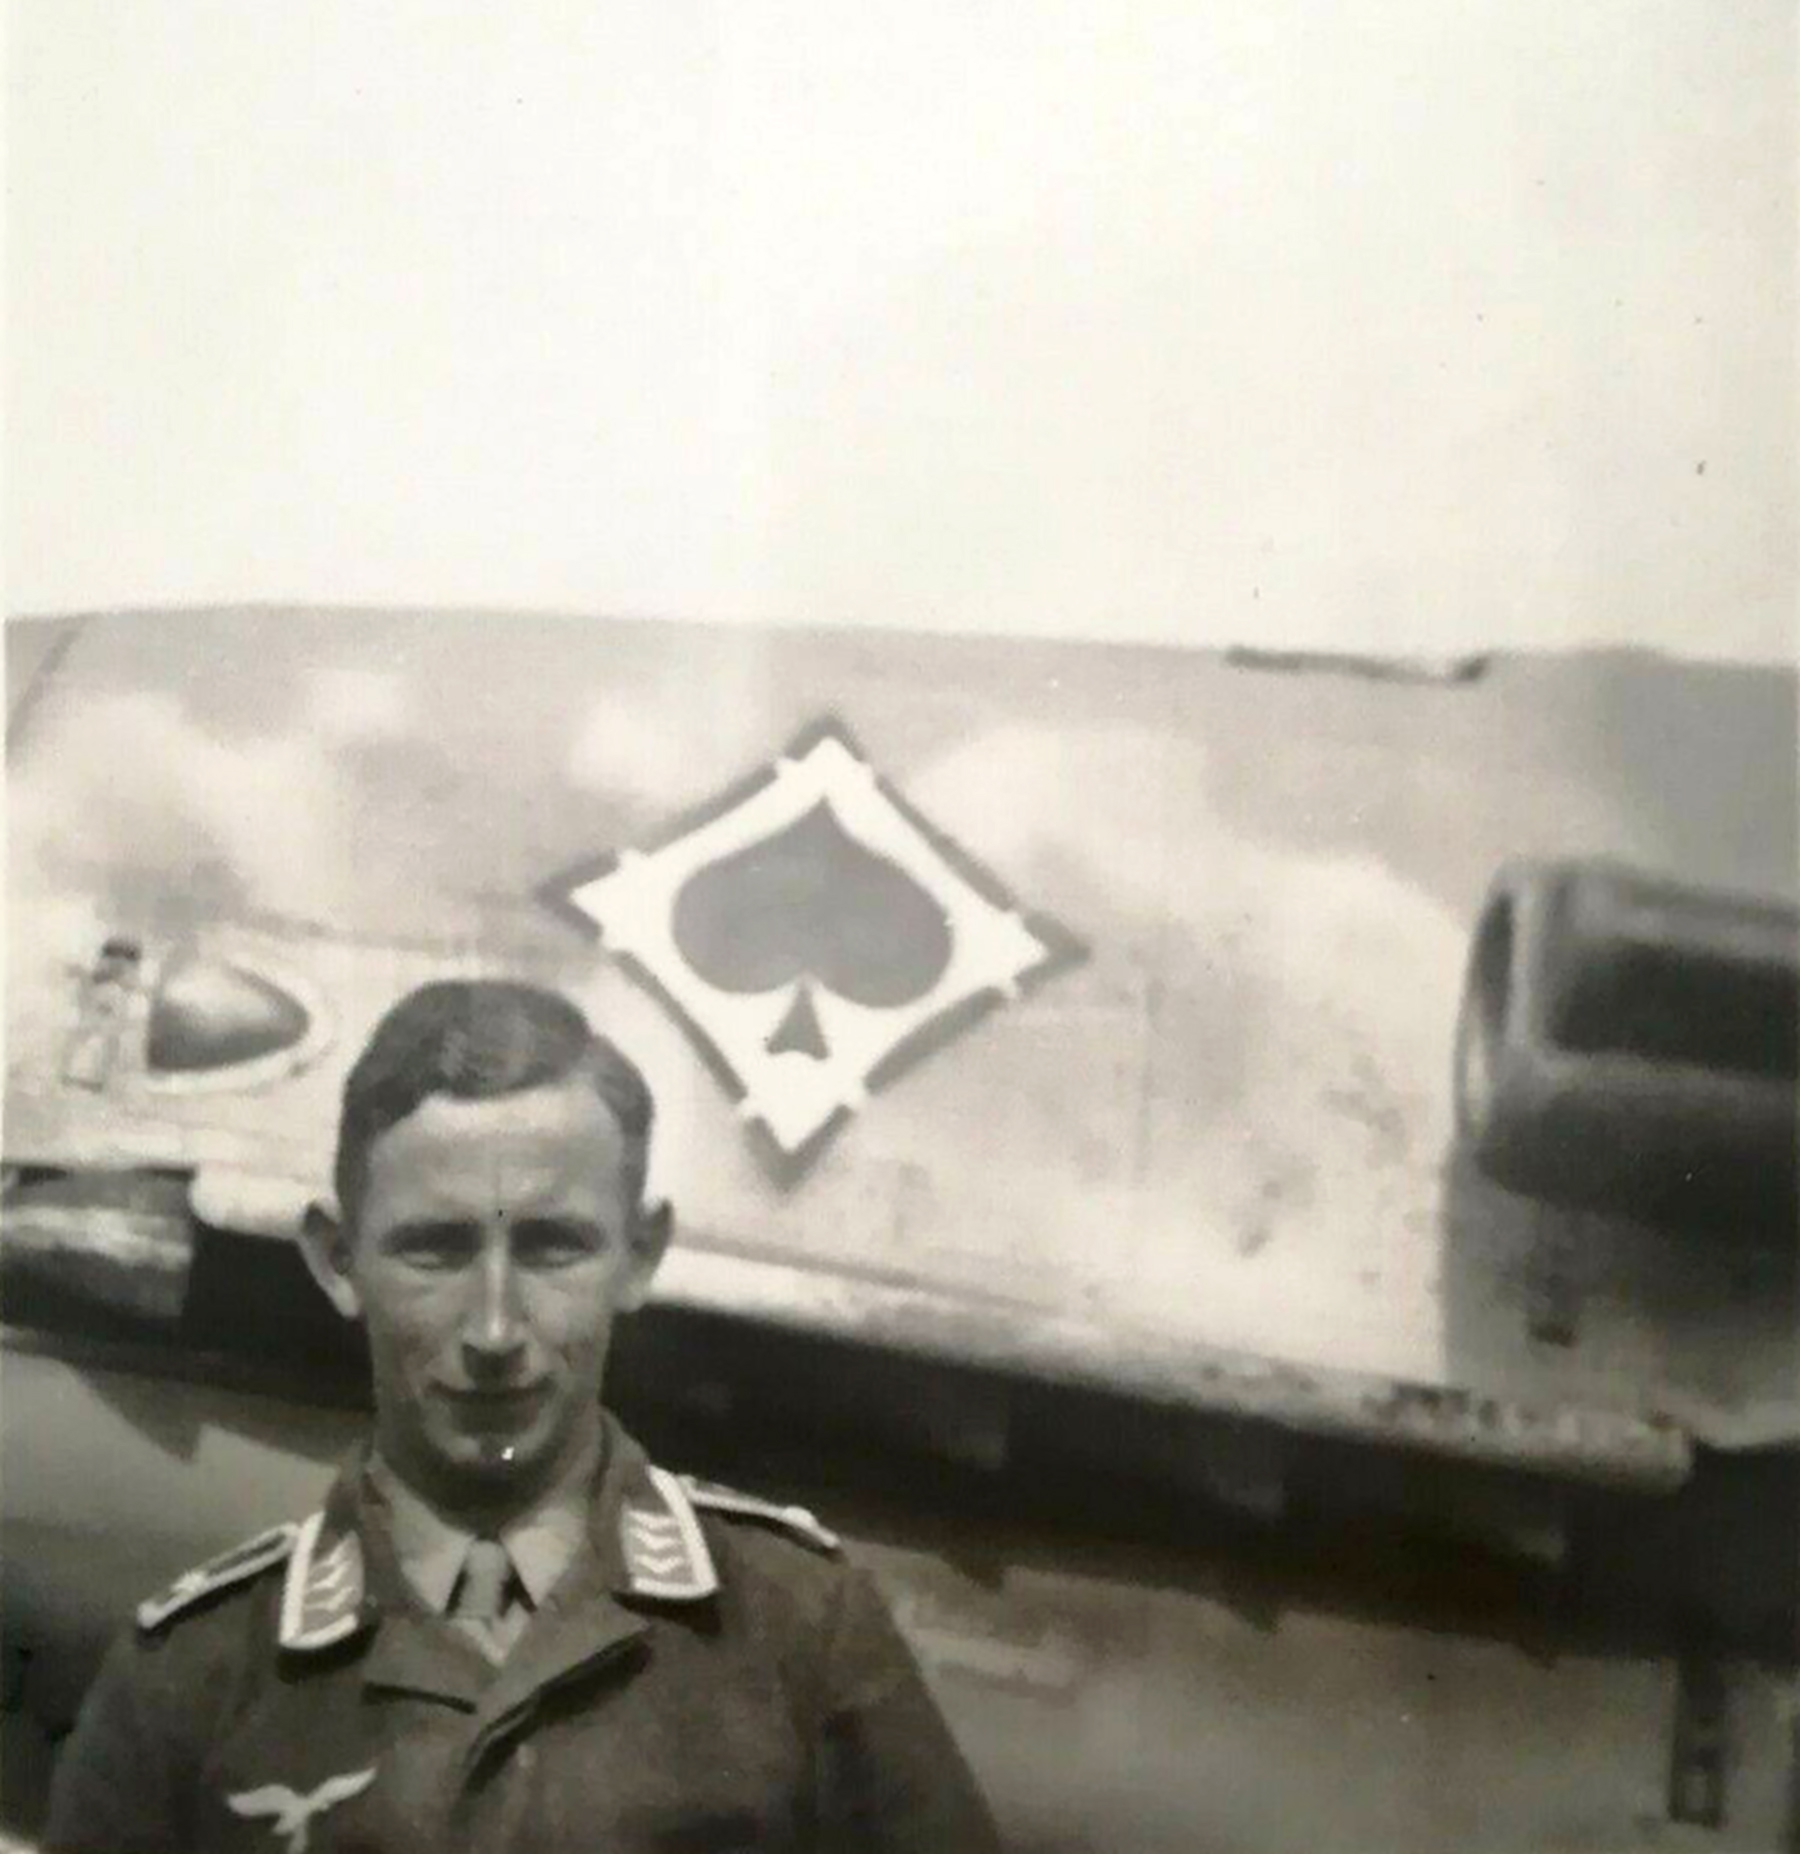 Aircrew Luftwaffe pilot JG53 Wilhelm Manz poses with Bf 109 ebay1